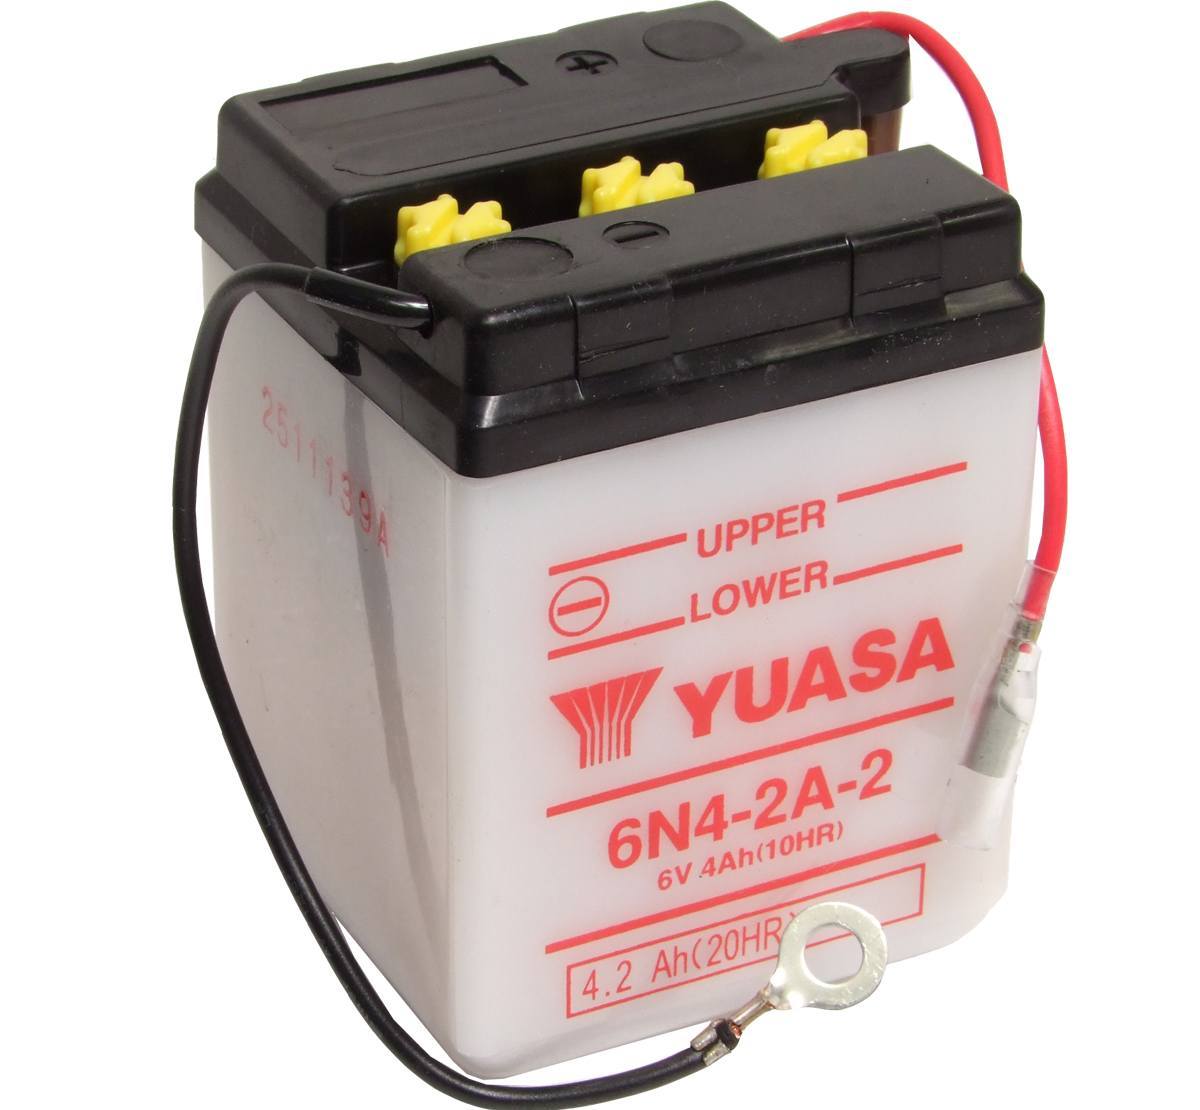 6N4-2A-2 Yuasa Motorcycle Battery